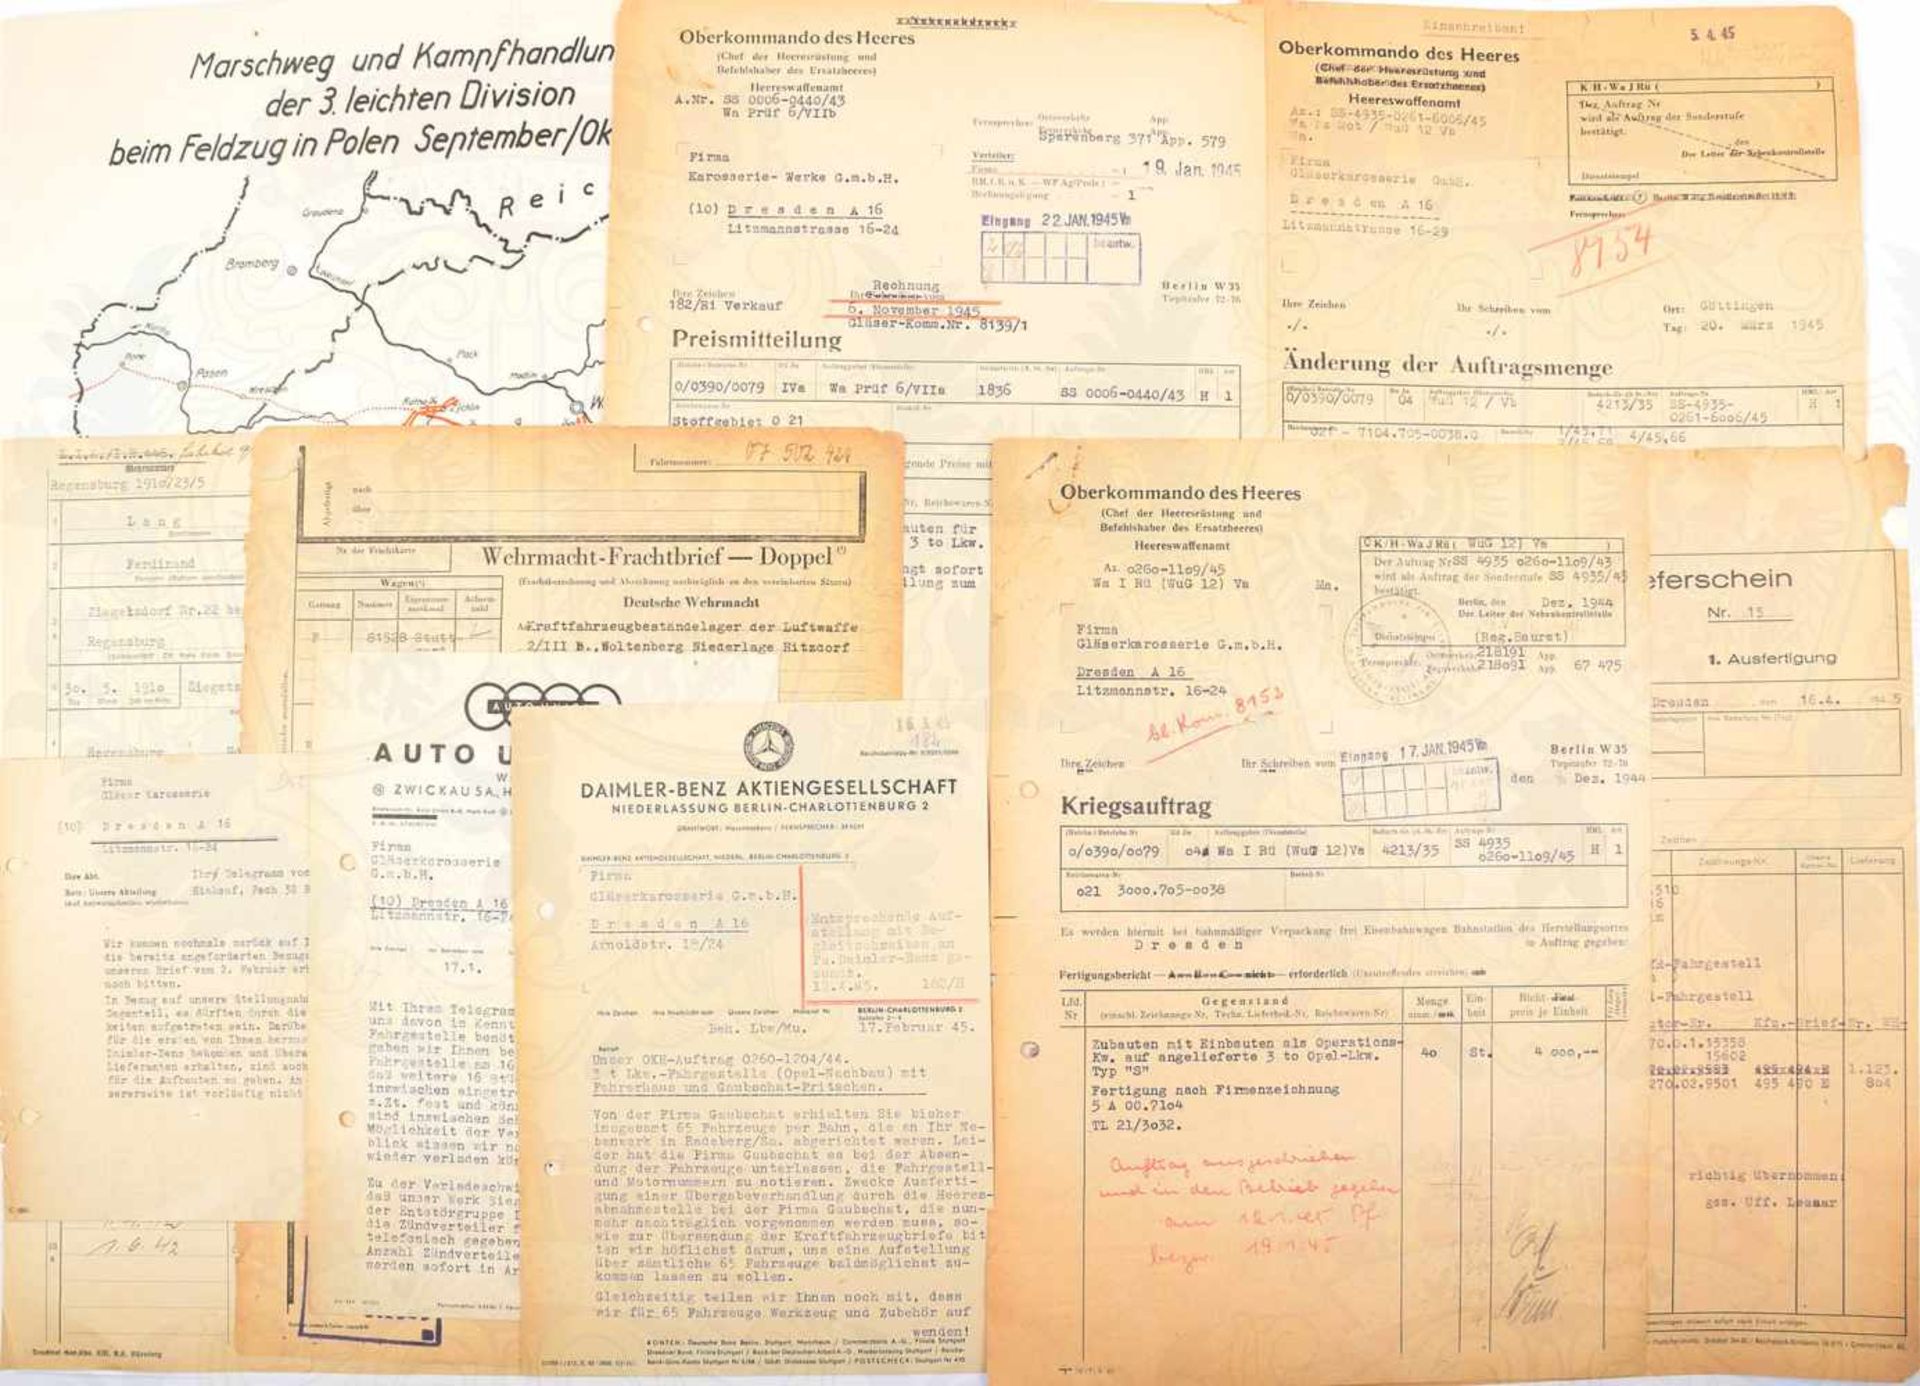 DOKUMENTENKONVOLUT, über 50 Teile, Tagebuch e. Uffz. zum Frankreich- u. Russland-Feldzug, Mai 1940-